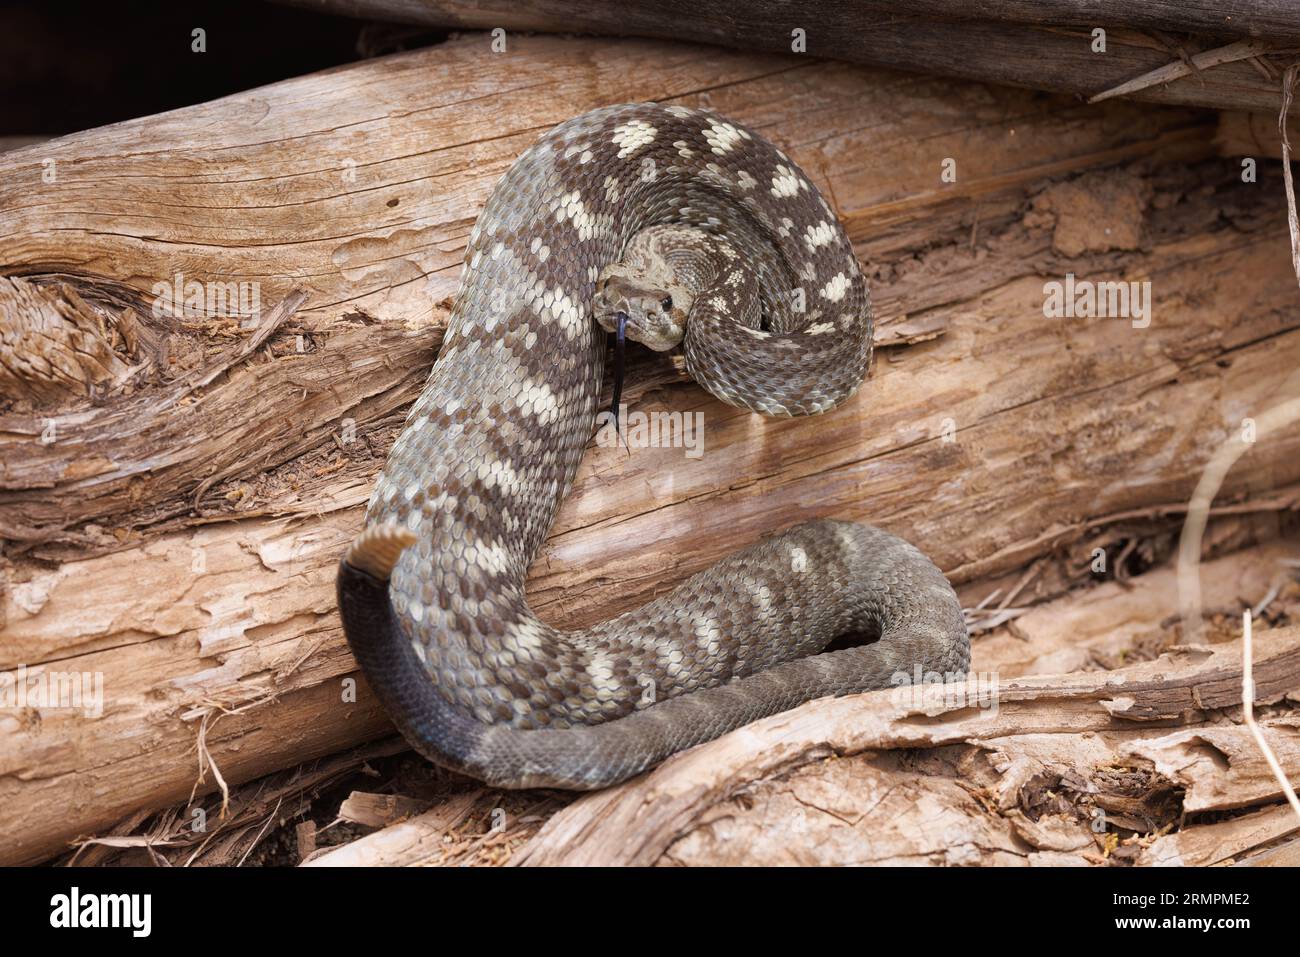 Eastern Black-tailed Rattlesnake, New Mexico, USA. Stock Photo